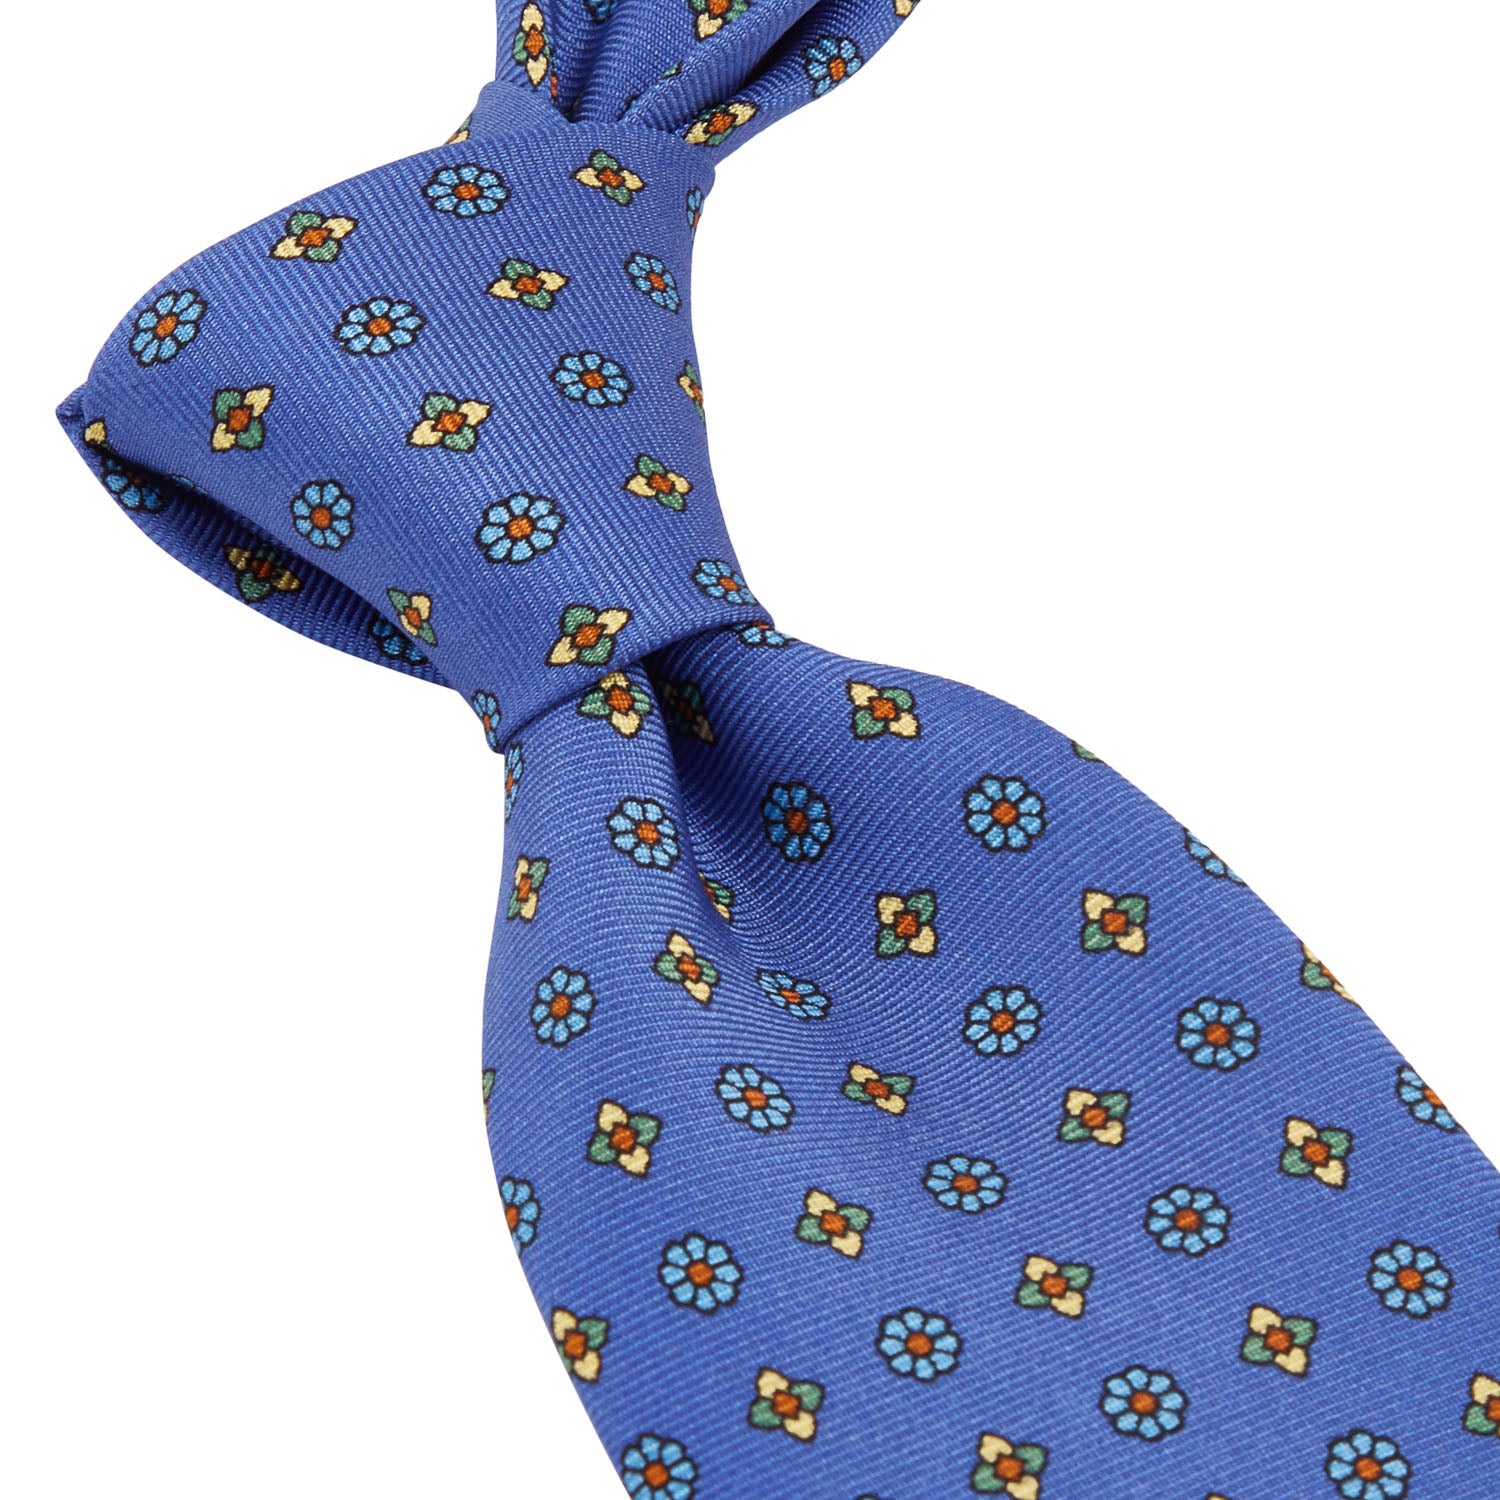 Sovereign Grade Lido Blue Floral Printed Silk Tie